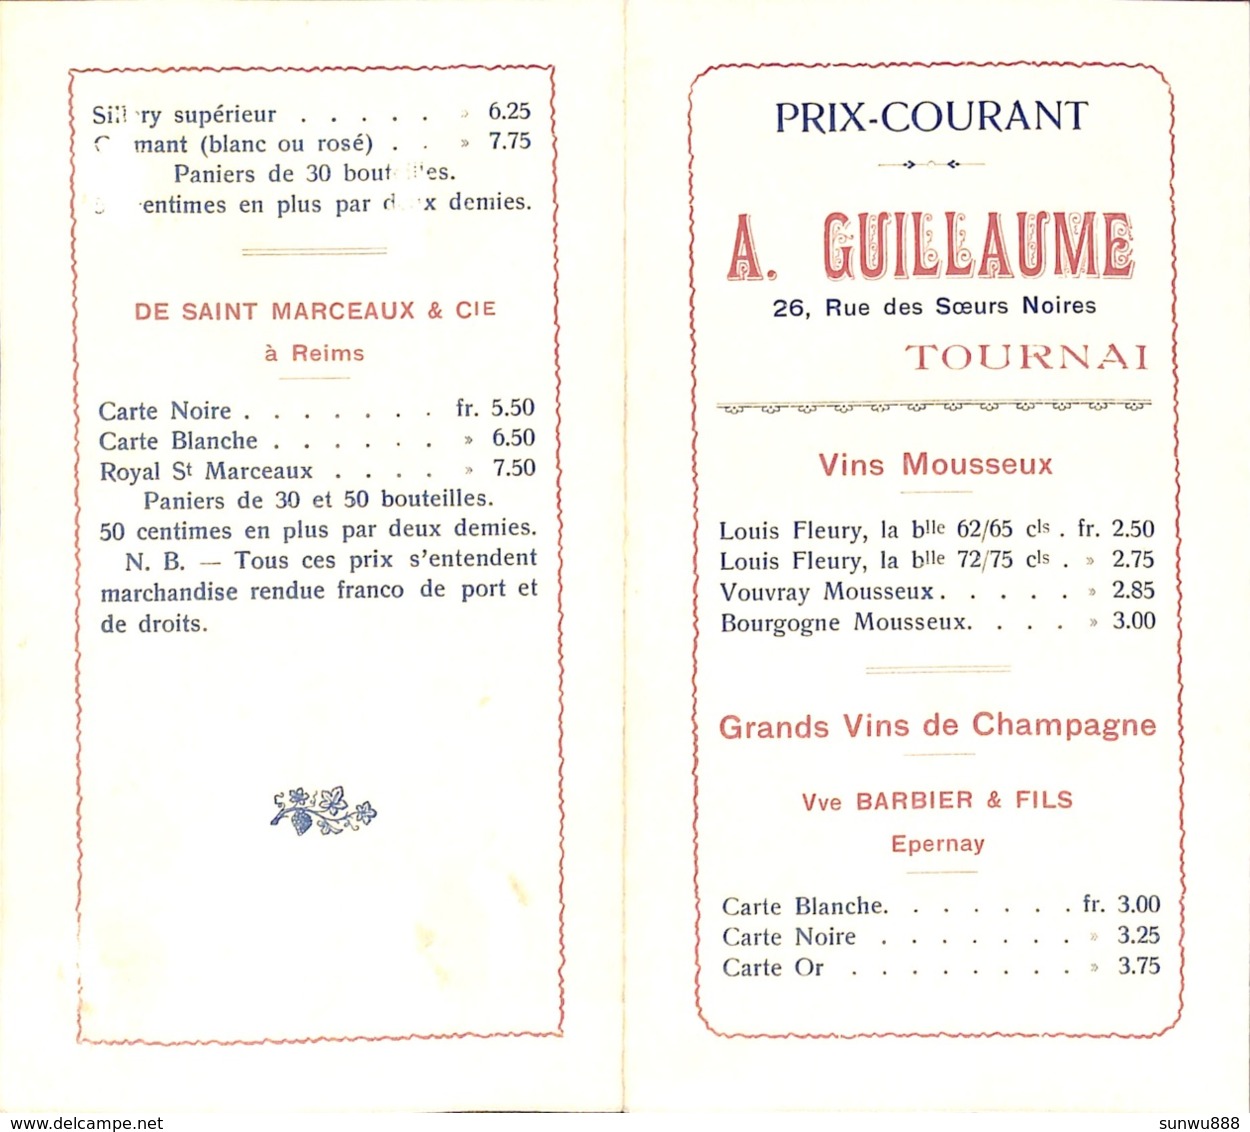 Prix-Courant A. Guillaume Tournai - Vins Mousseux, Champagne Epernay, Crémant... - Food